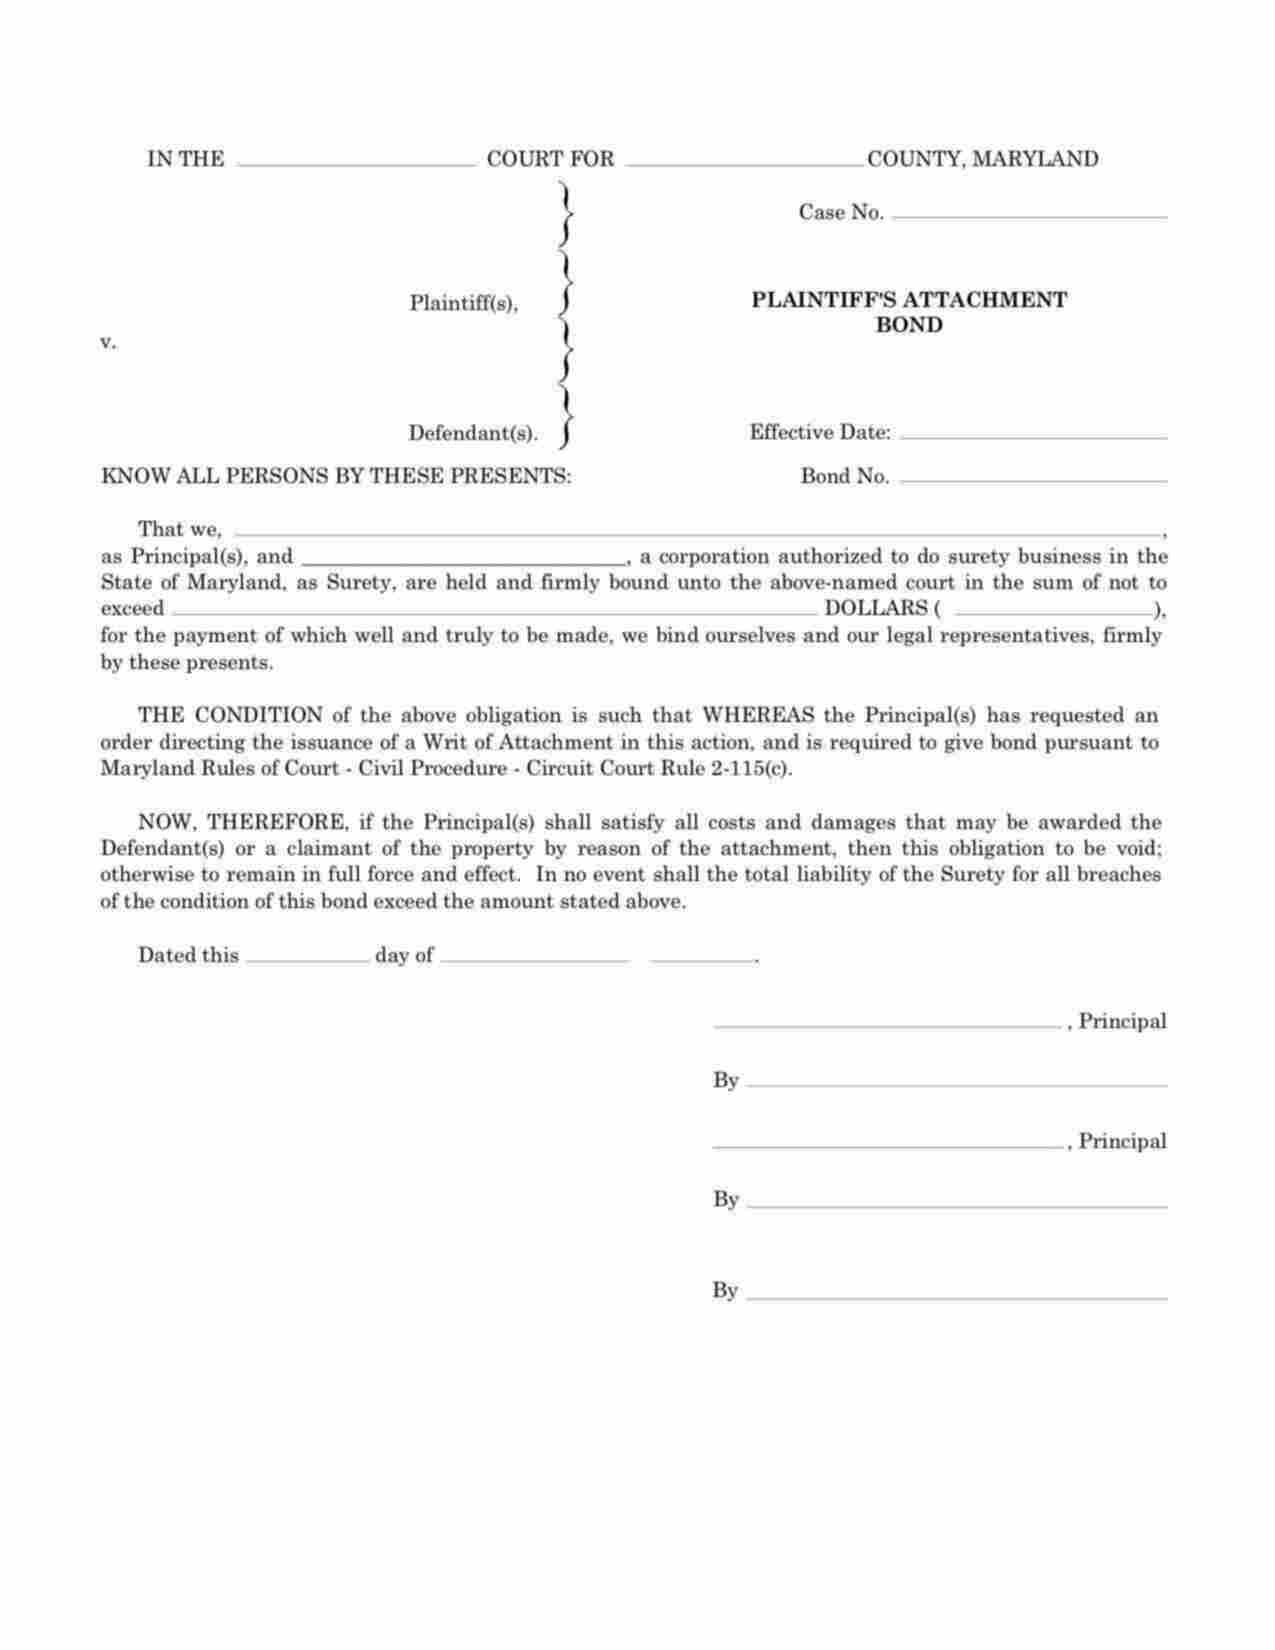 Maryland Plaintiffs Attachment Bond Form